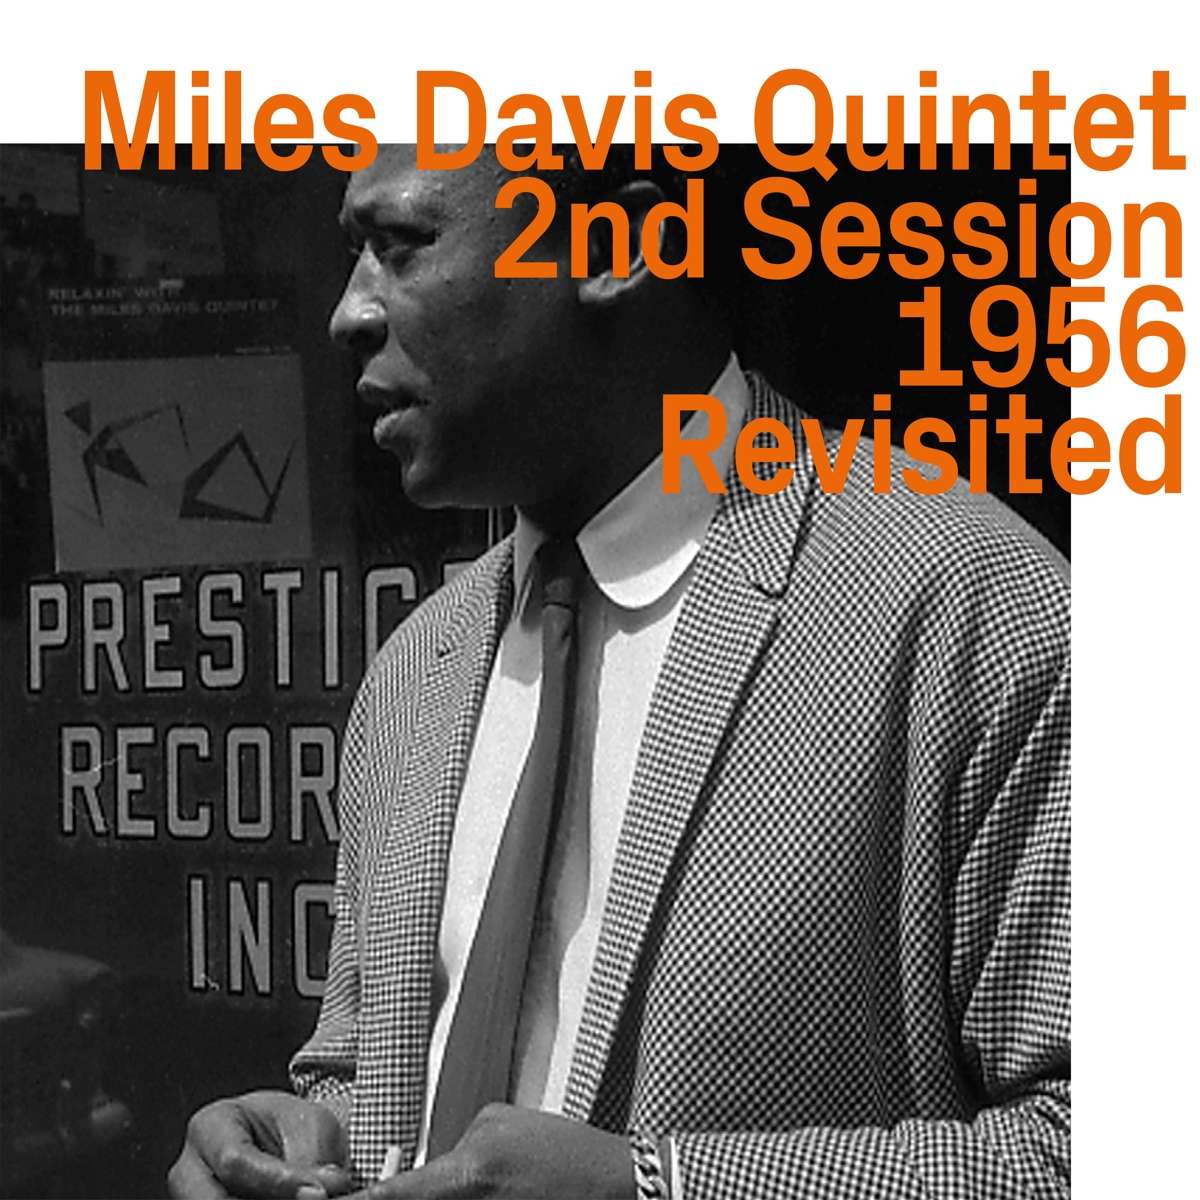 Miles Davis Quintet, 2nd Session 1956 Revisited